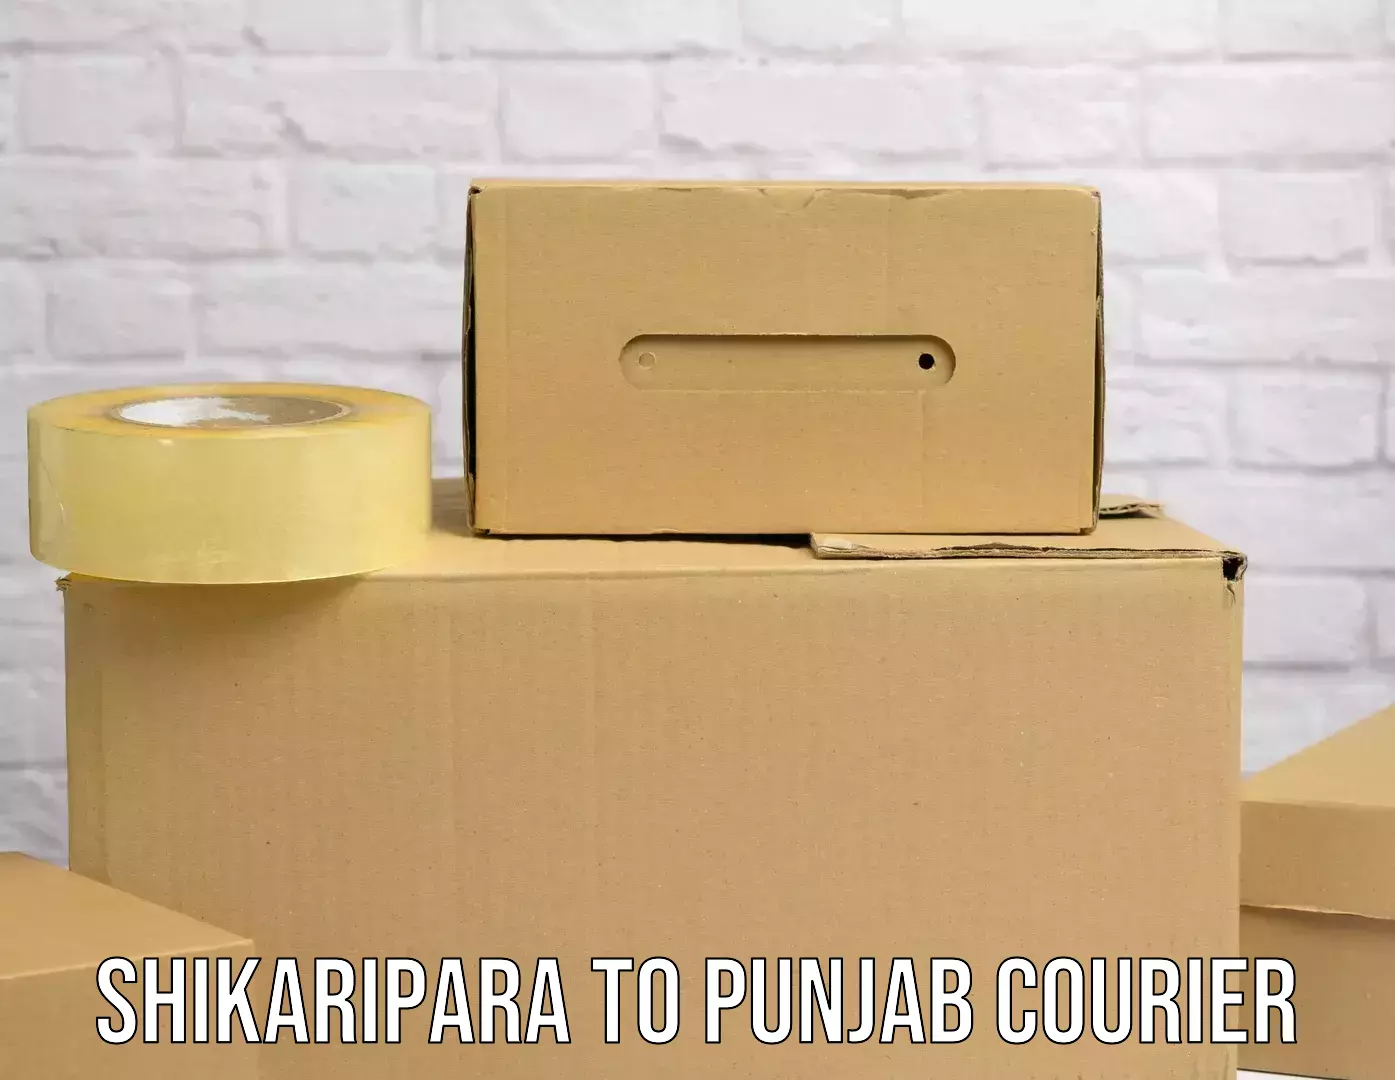 State-of-the-art courier technology Shikaripara to Kapurthala